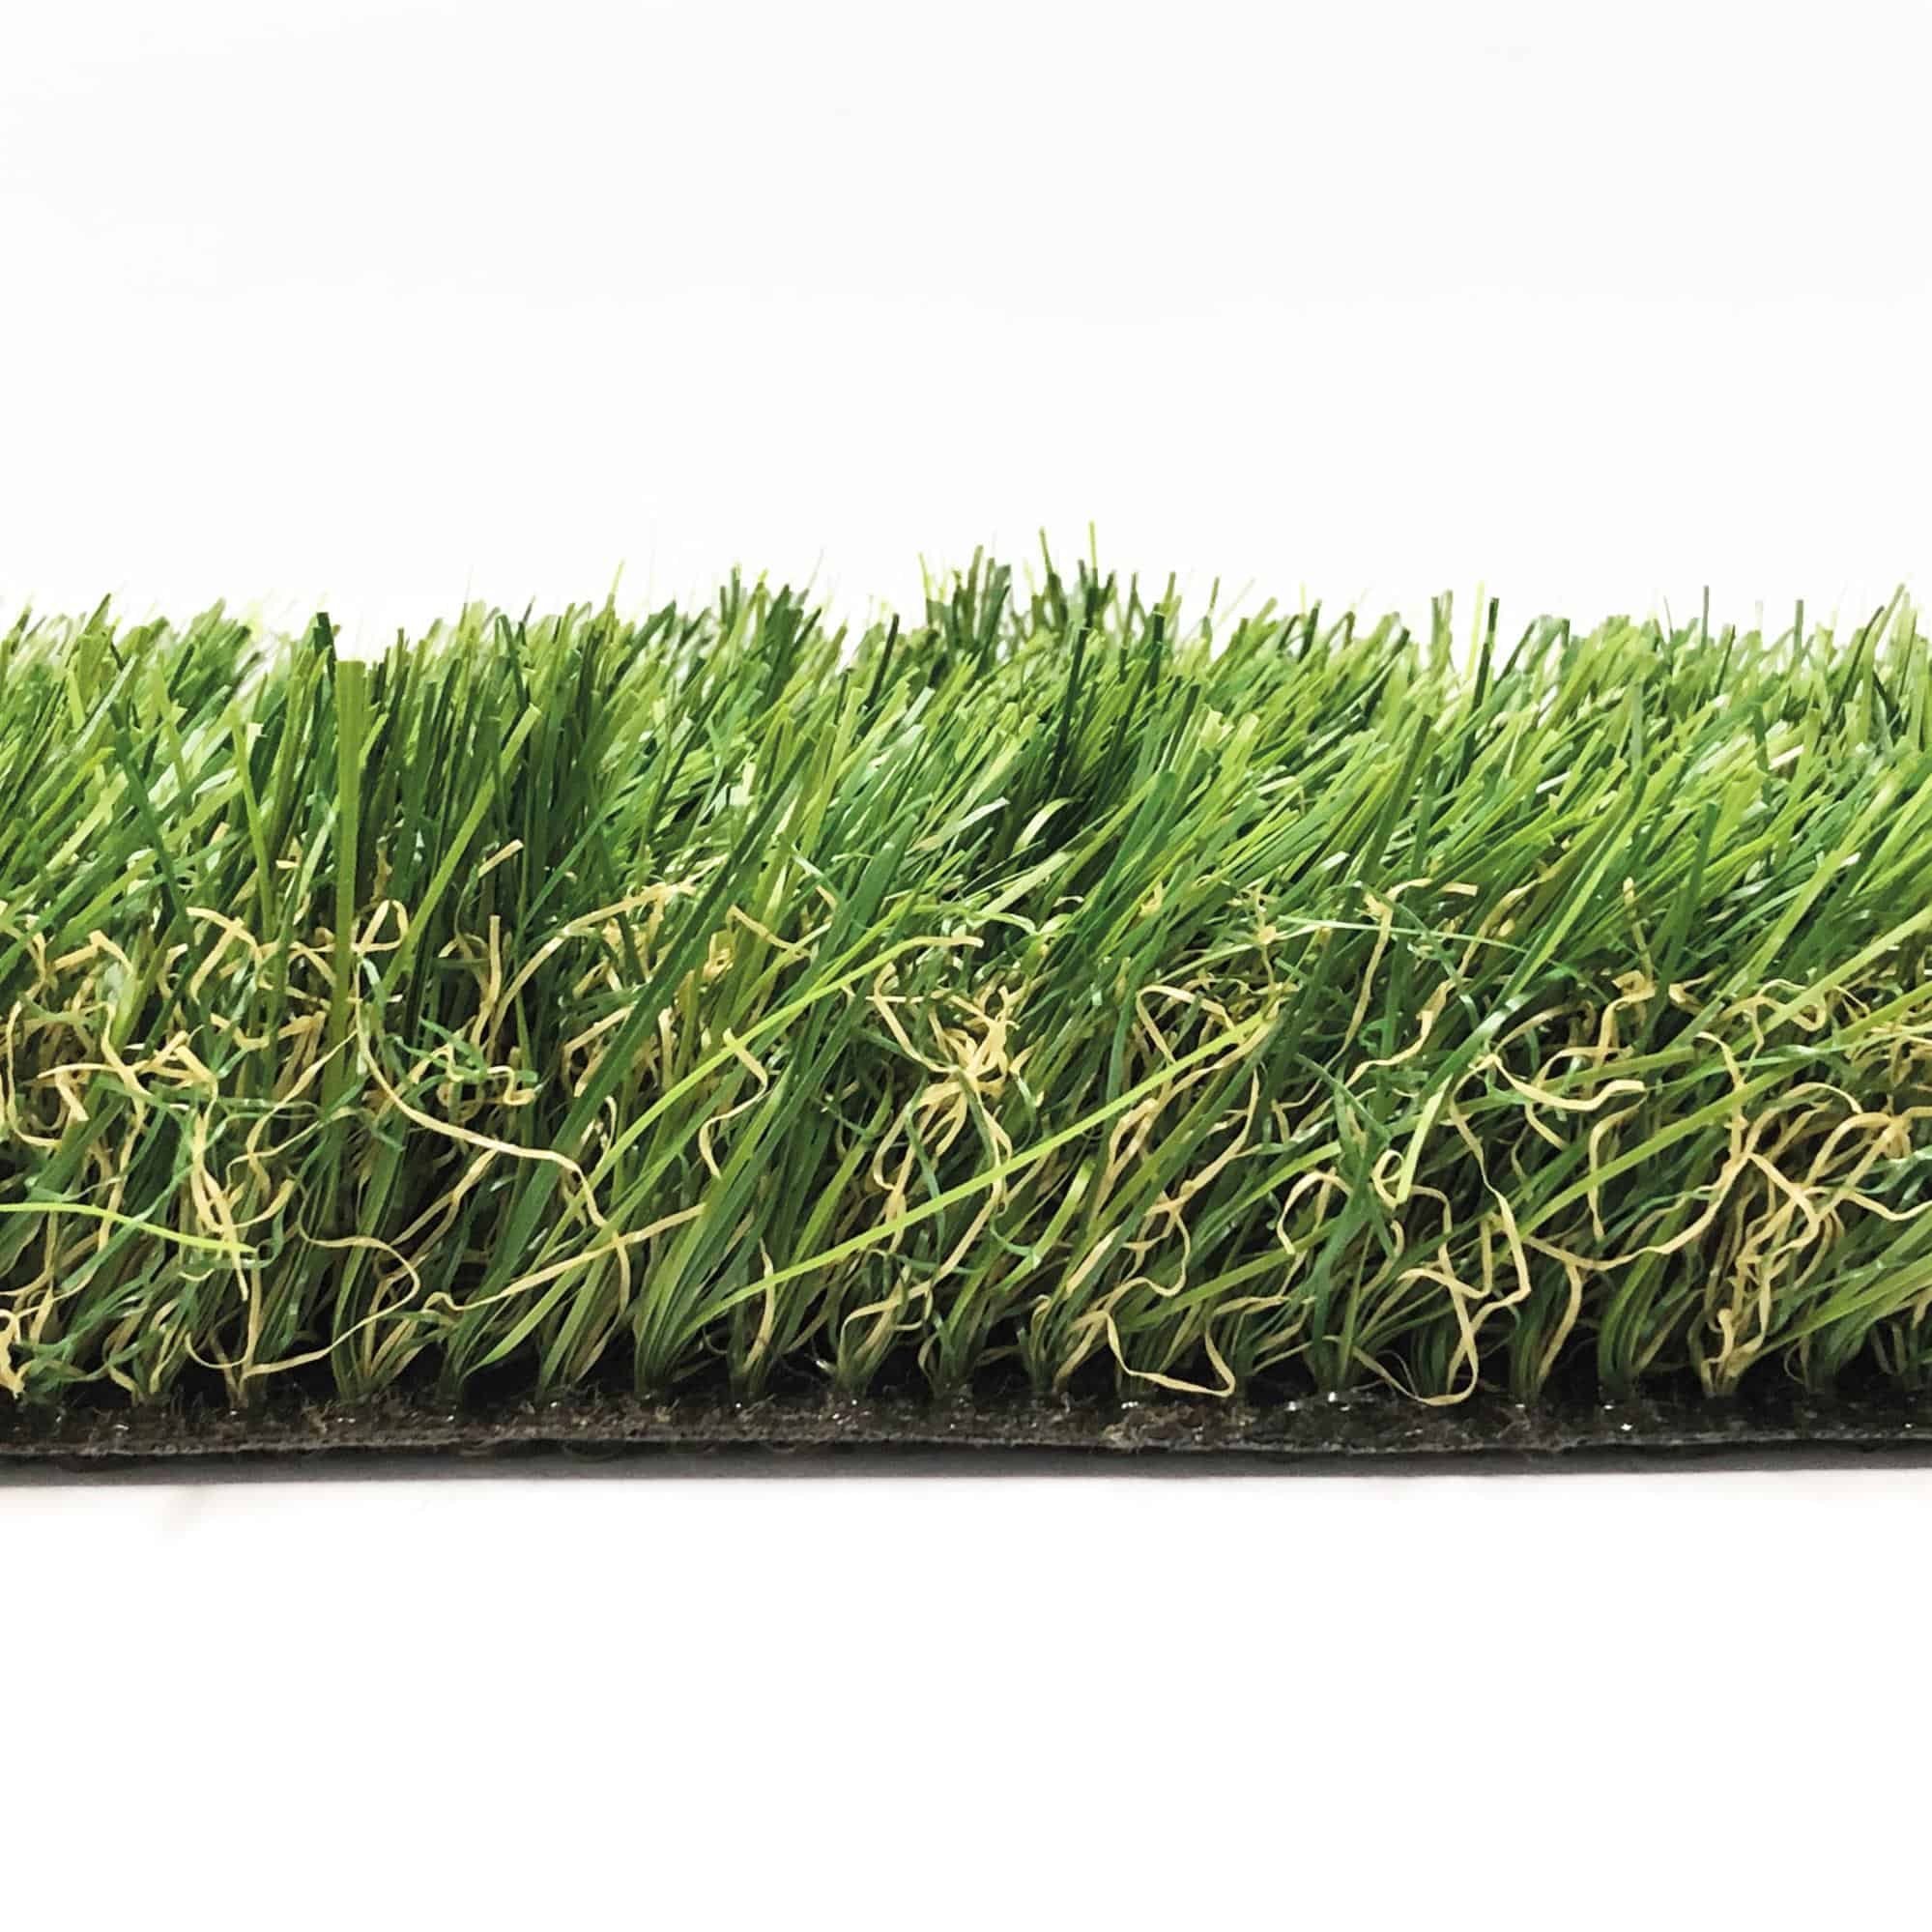 CORE Lawn Natural Artificial Grass 4m Wide Roll 12 m